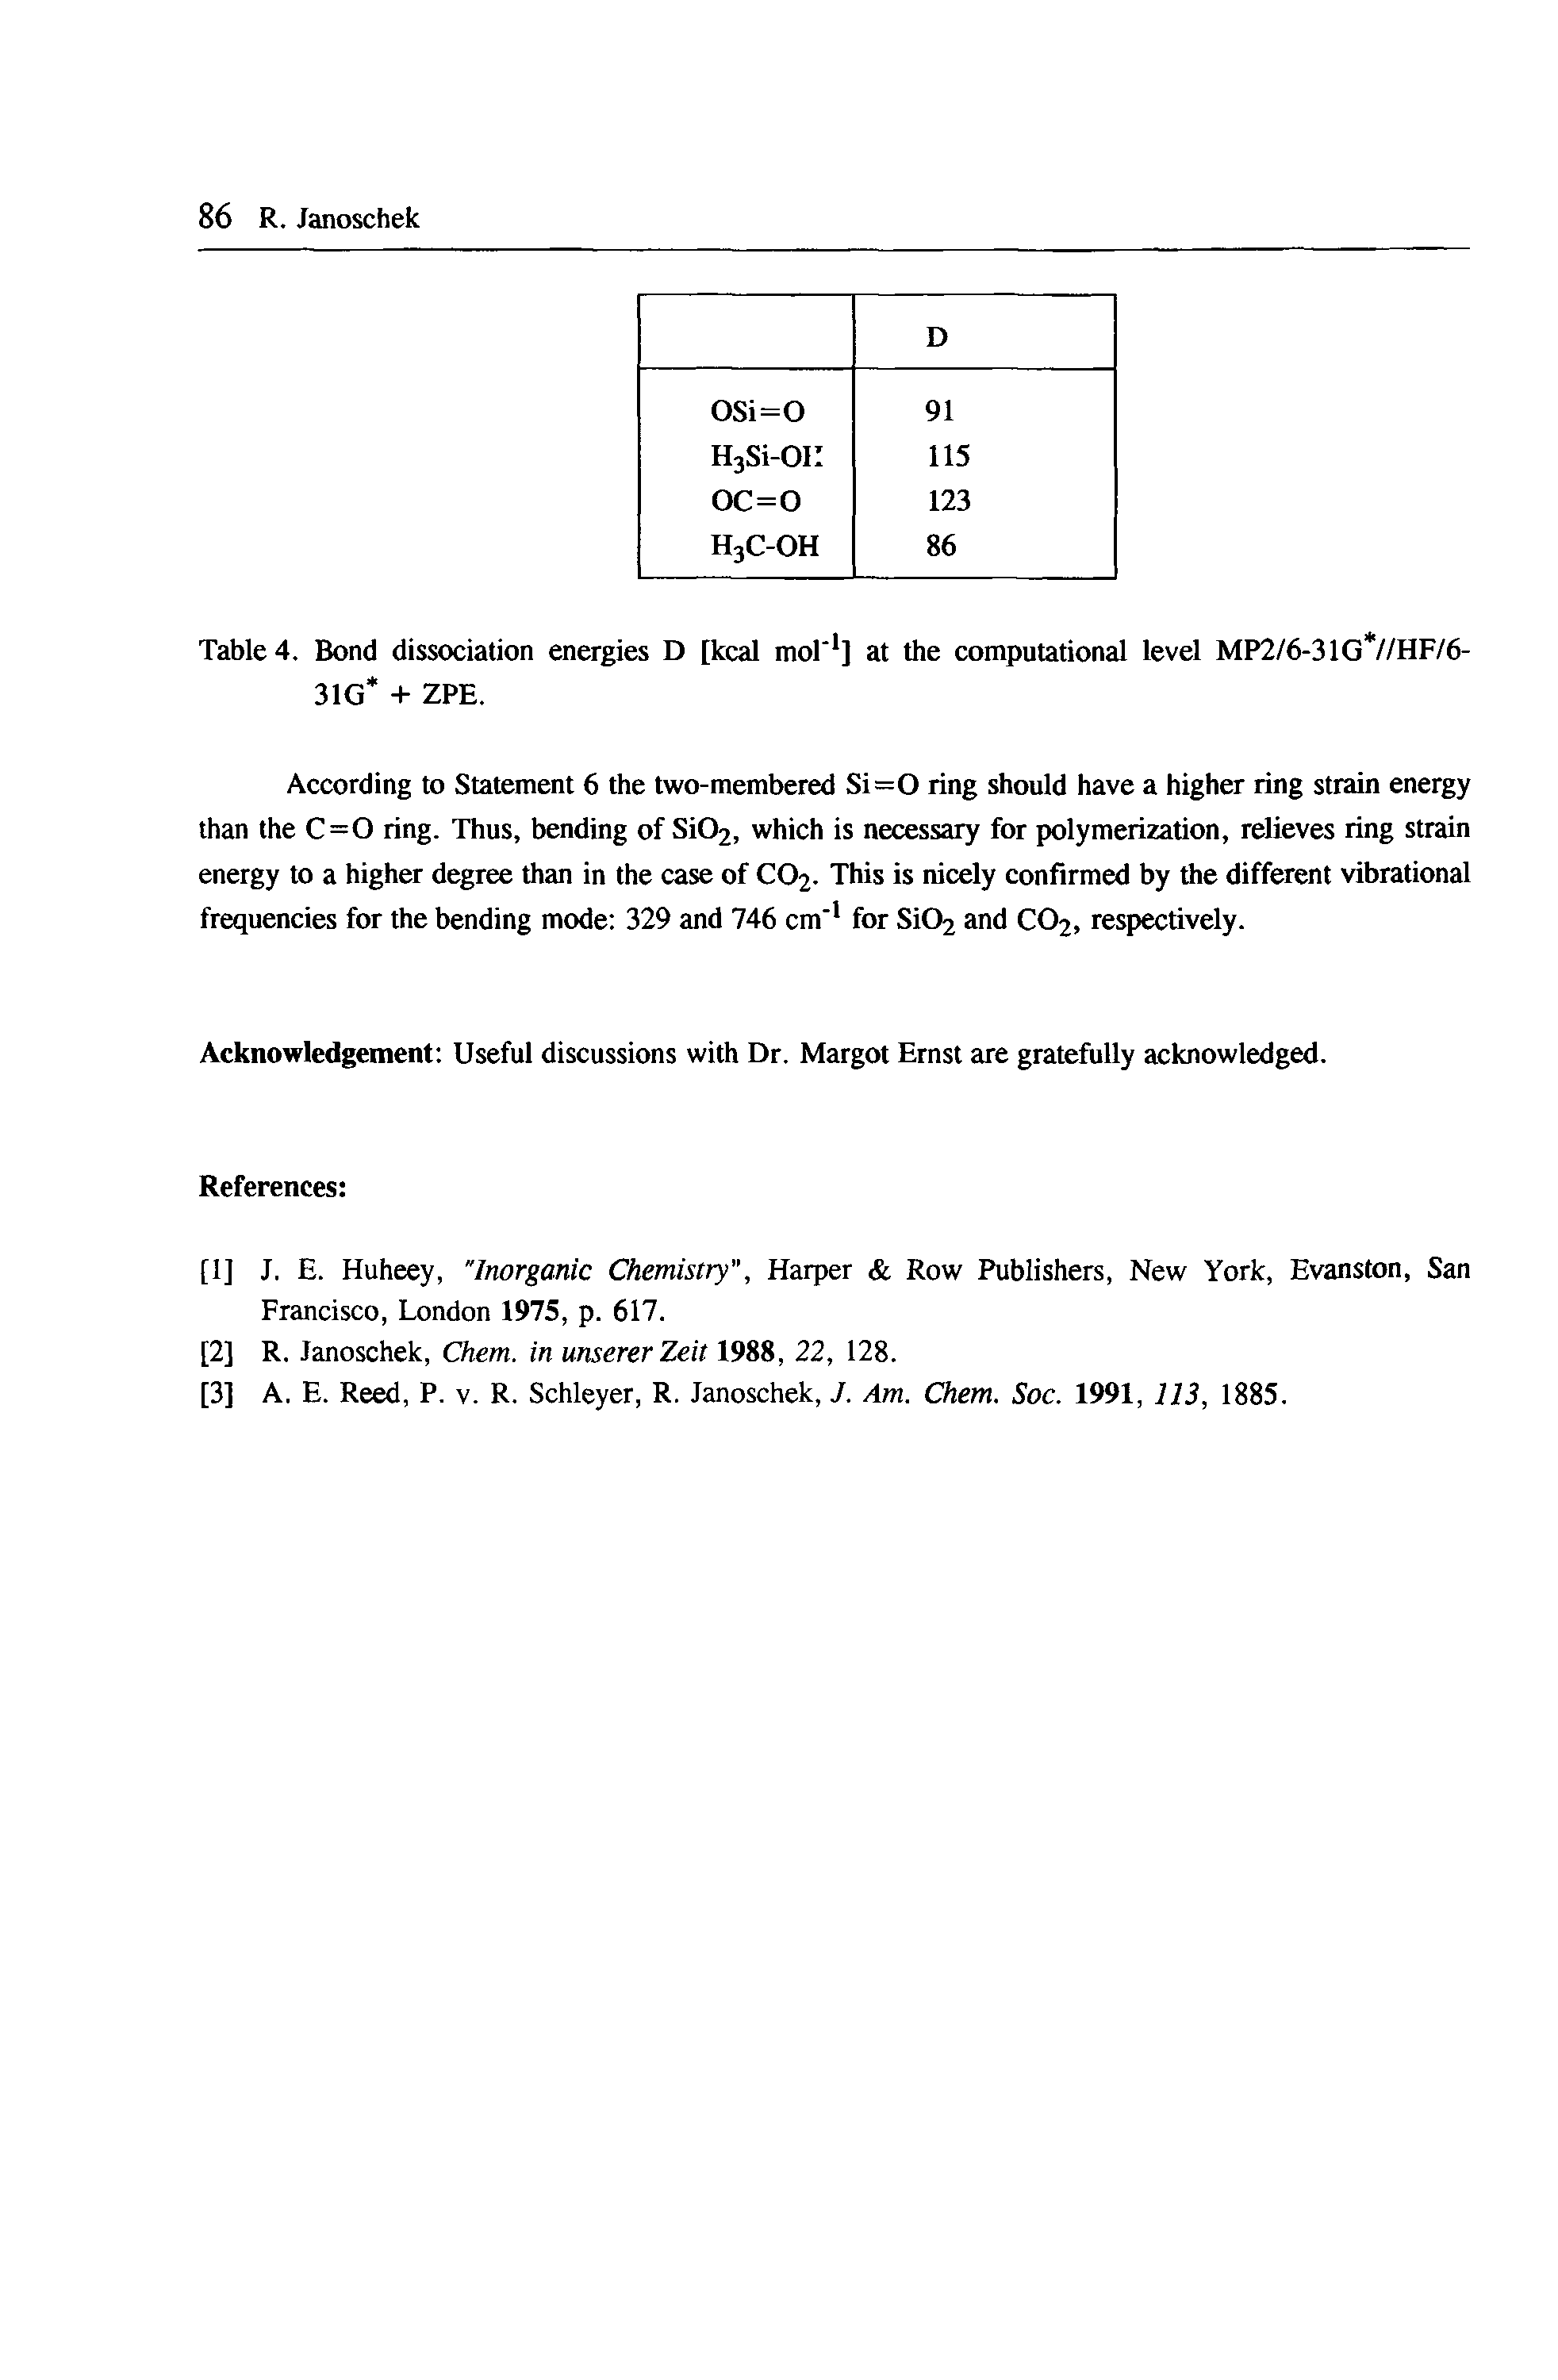 Table 4. Bond dissociation energies D [kcal mol 1] at the computational level MP2/6-31G //HF/6-31G + ZPE.